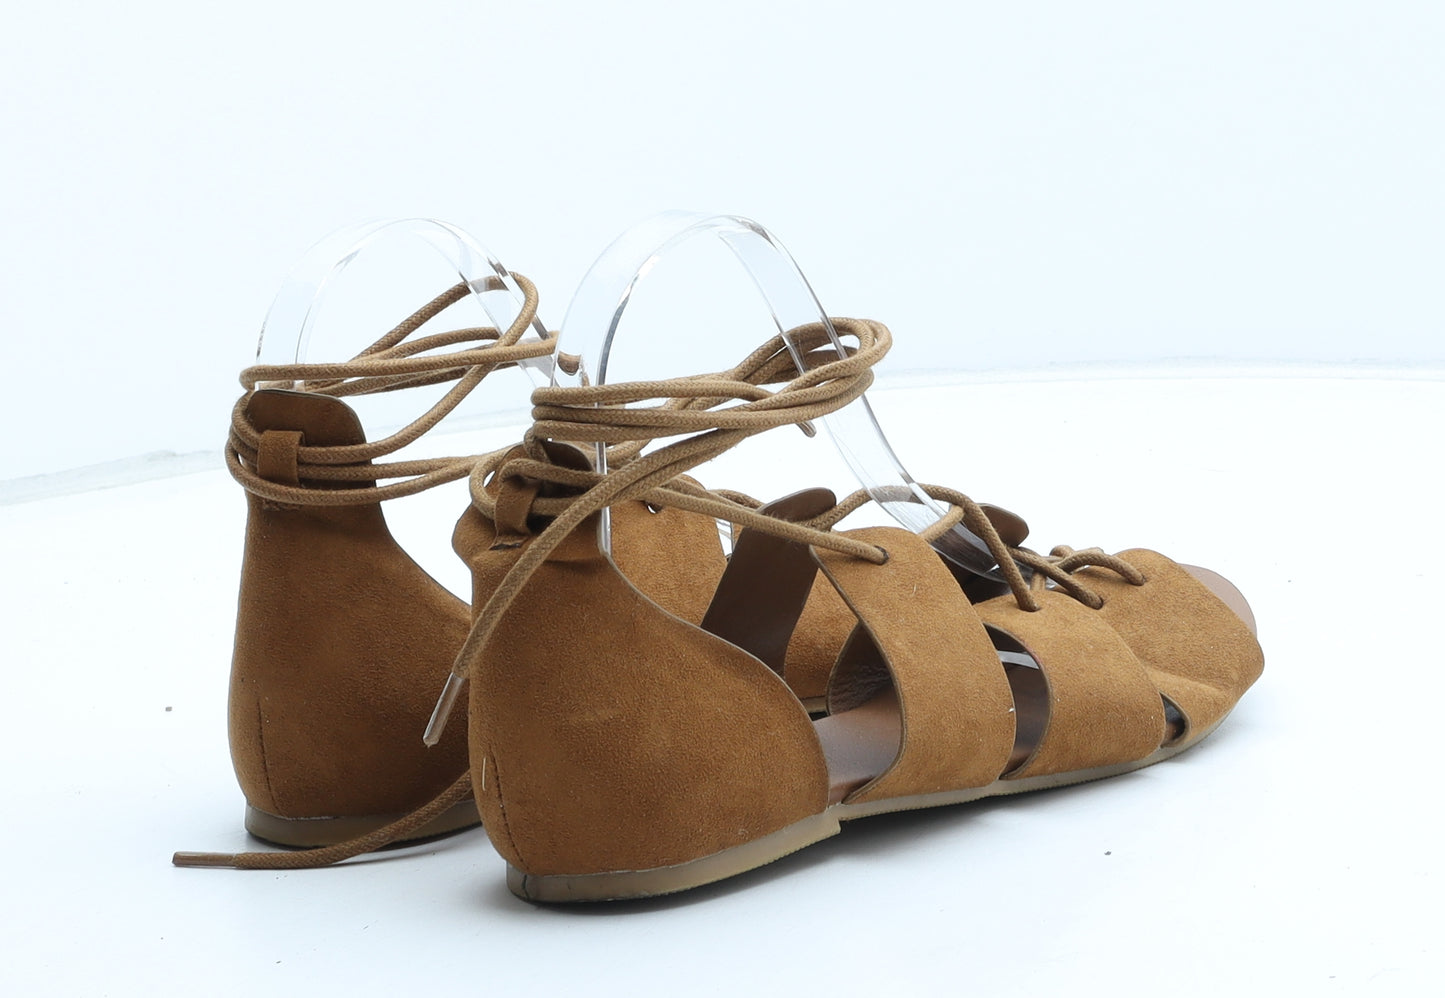 H&M Womens Brown Synthetic Gladiator Sandal UK - UK Size Estimated 3